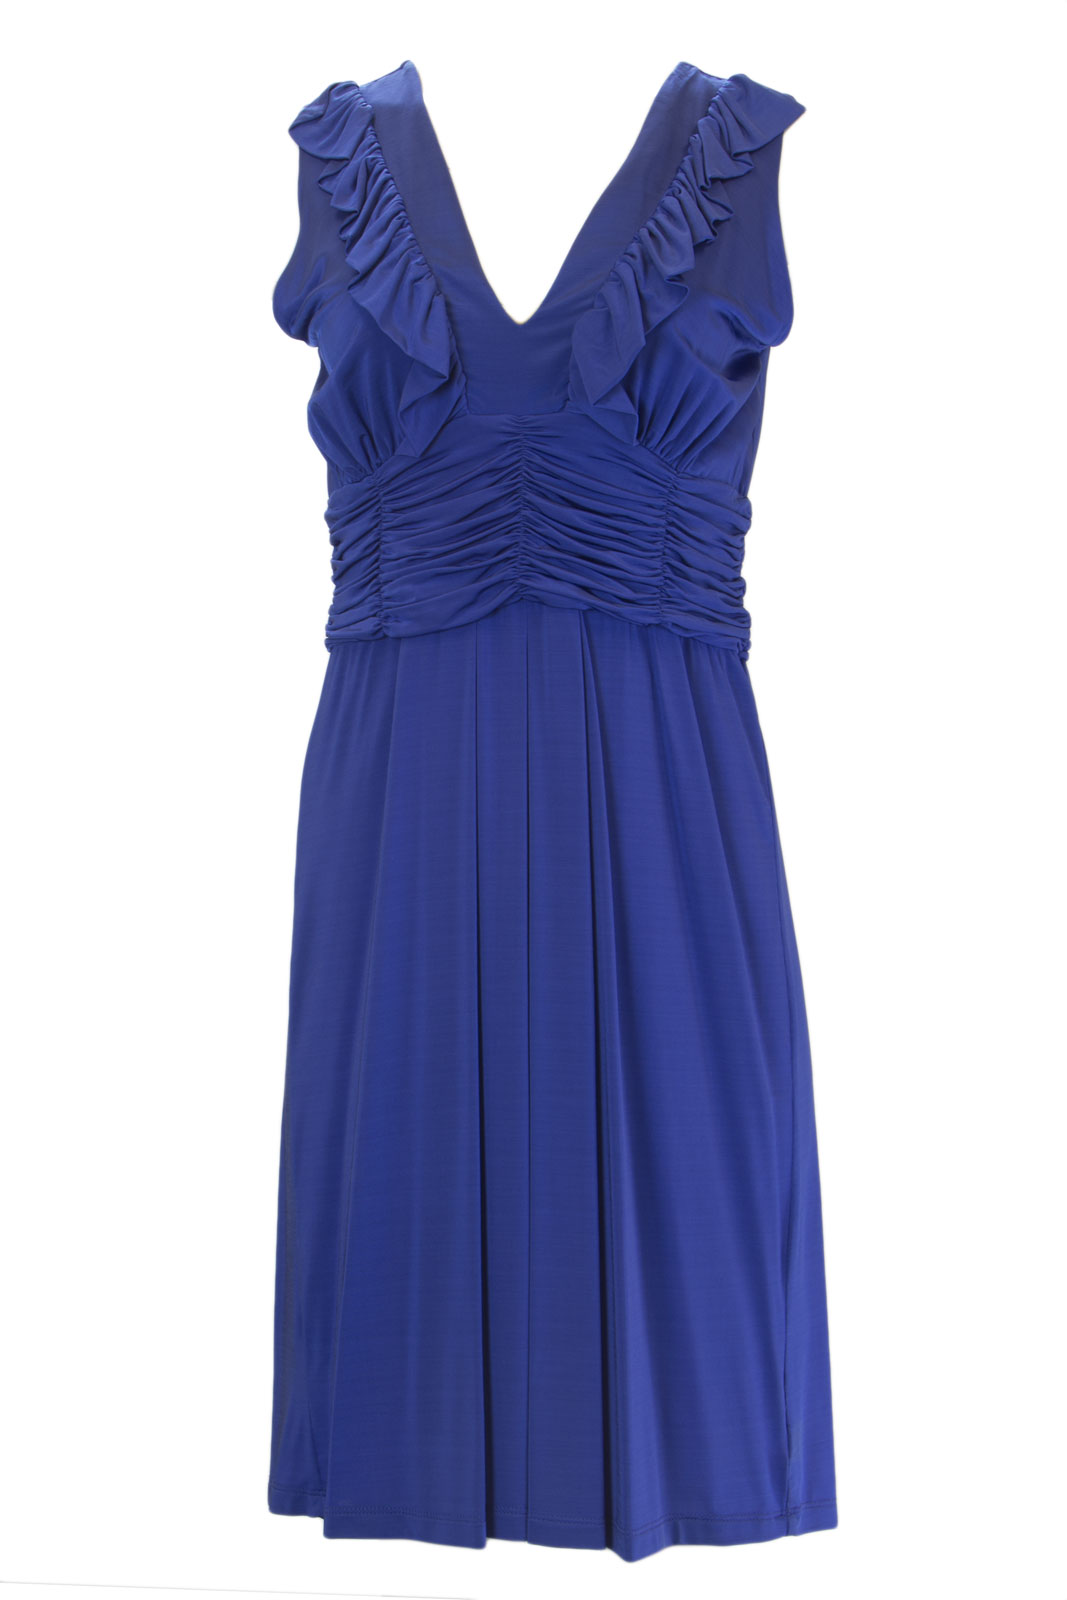 ANALILI Women's Ocean Blue V-Neck Sleveless A-Line Dress 851AH14 $275 NWT